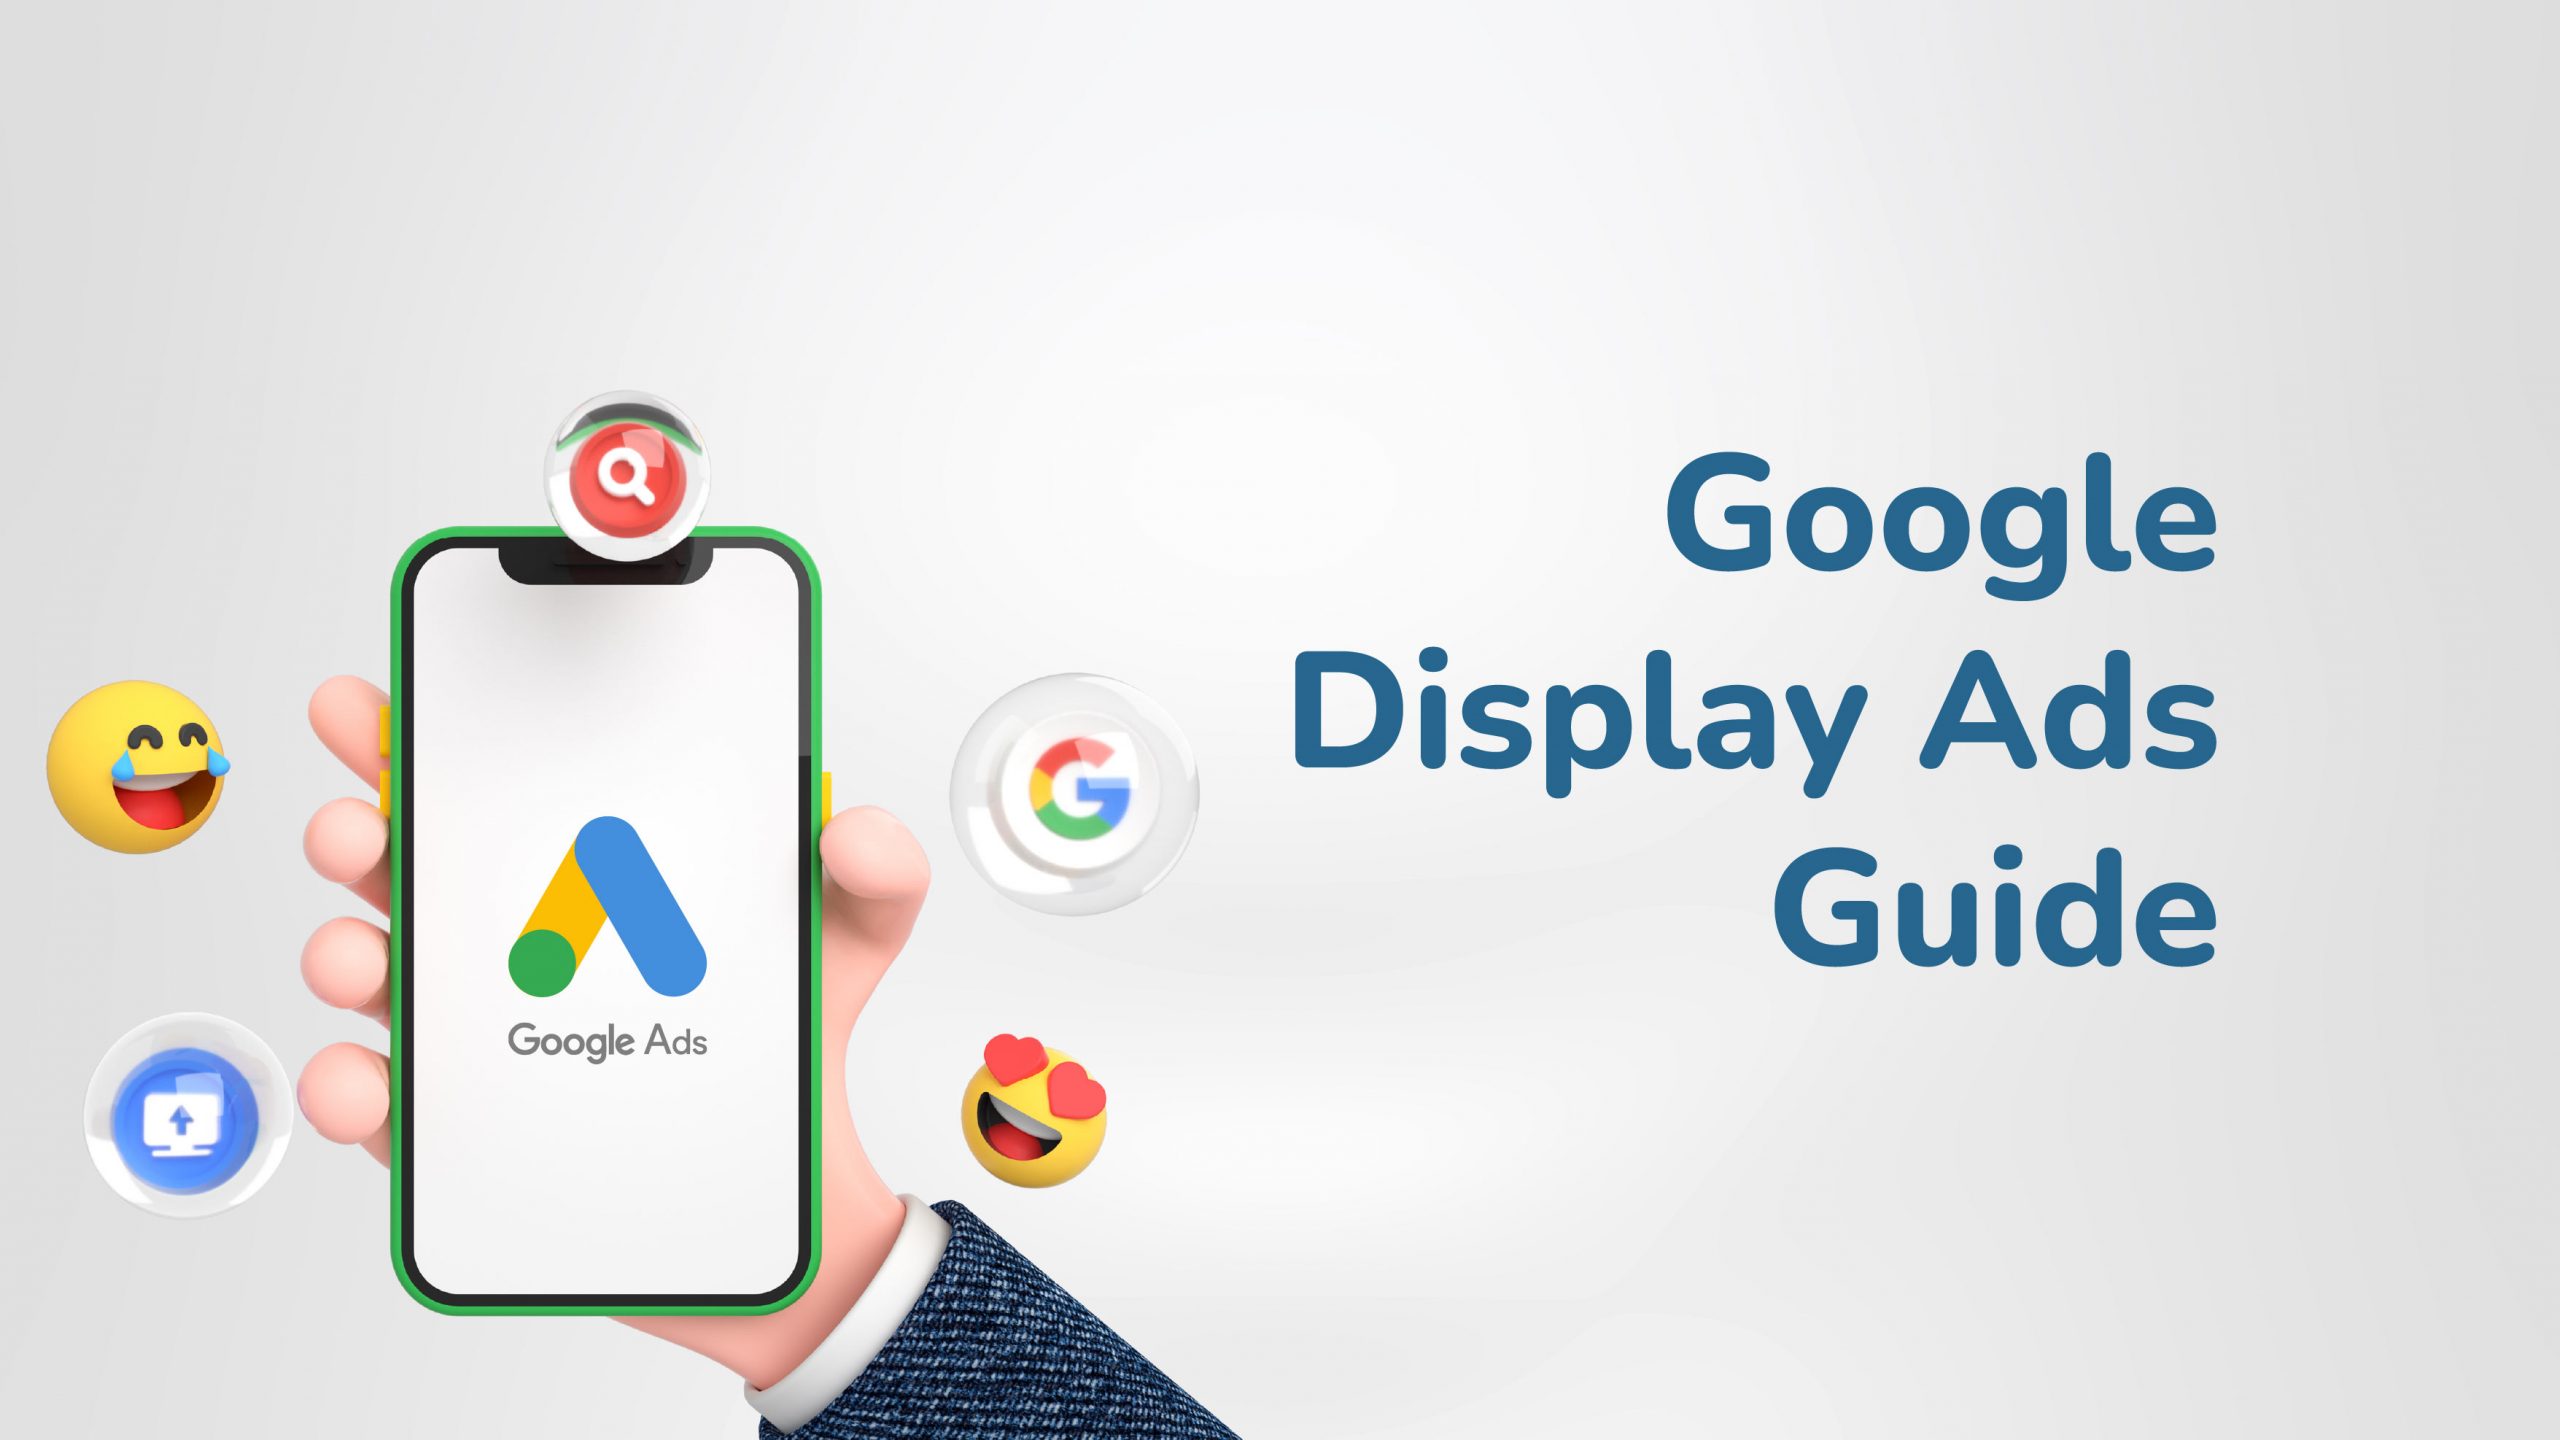 Google Display Ads Guide